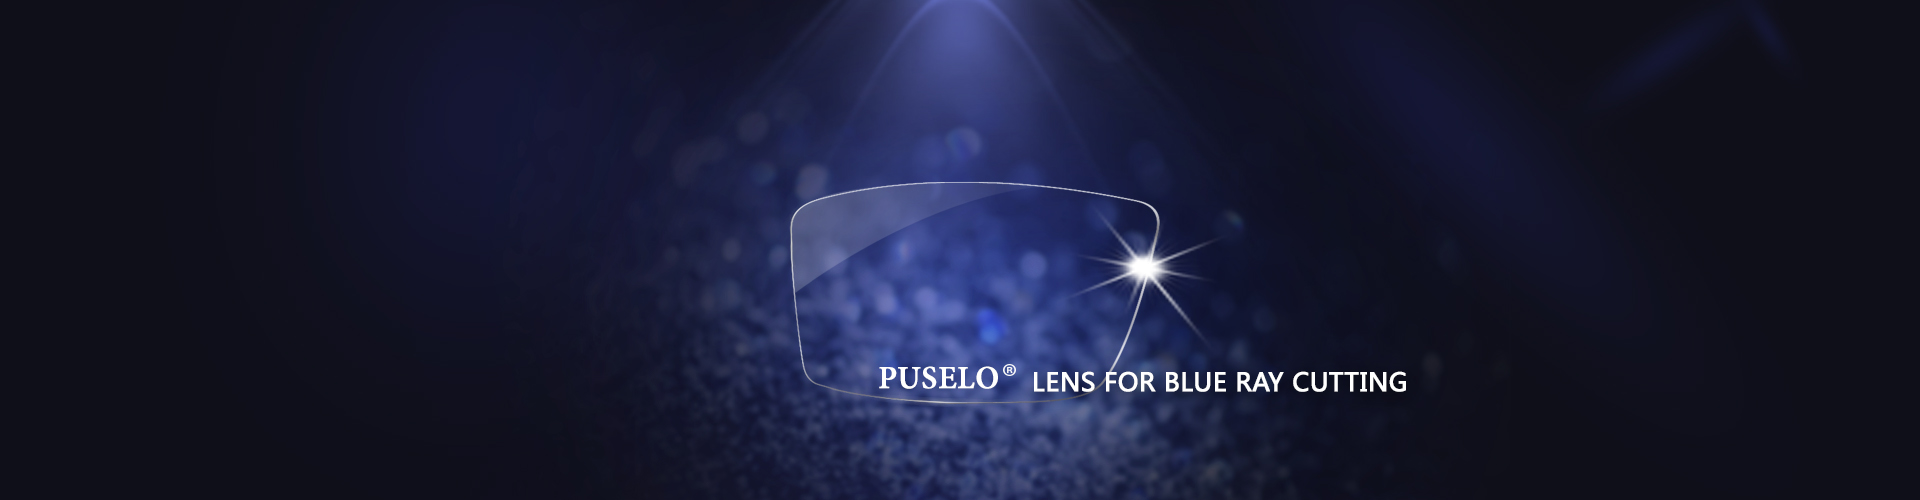 Anti-blue light lens